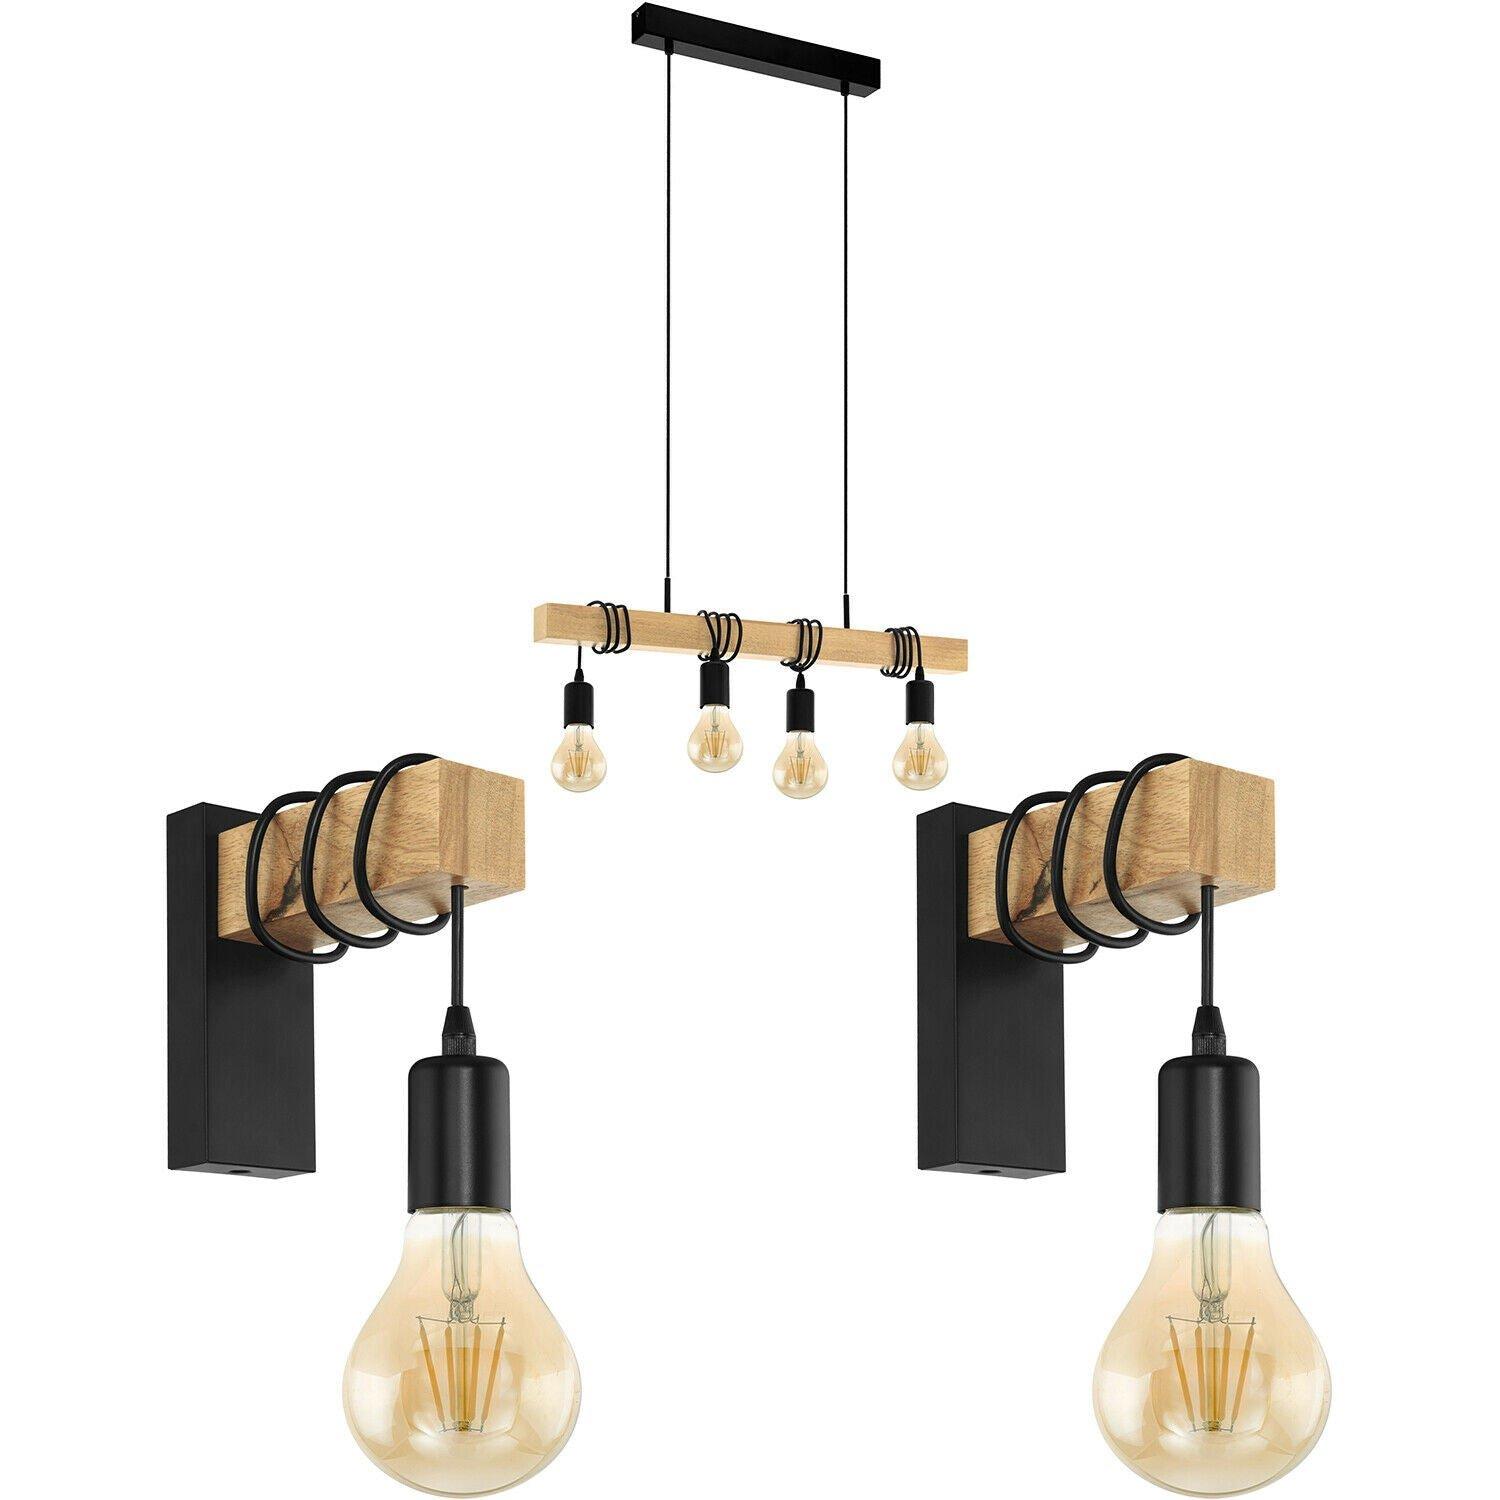 Quad Ceiling Light & 2x Matching Wall Lights Black & Wood Hanging Trendy Lamp